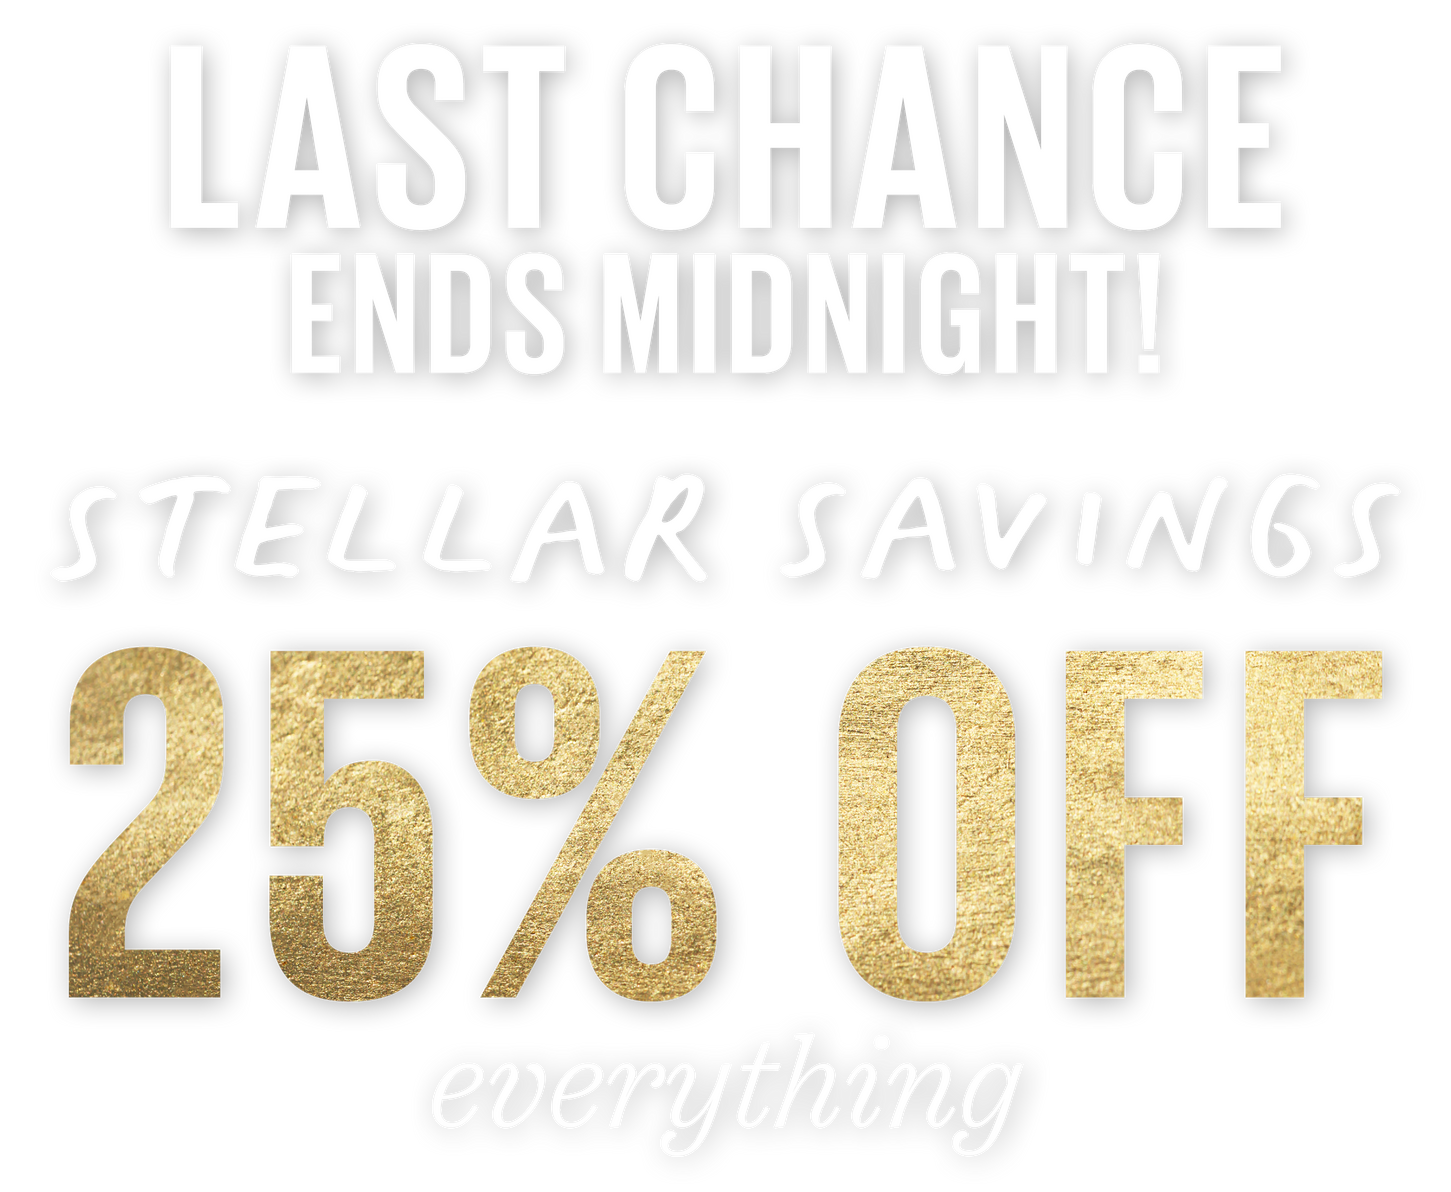 Last Chance. Ends midnight! Stellar Savings. 25% off everything.